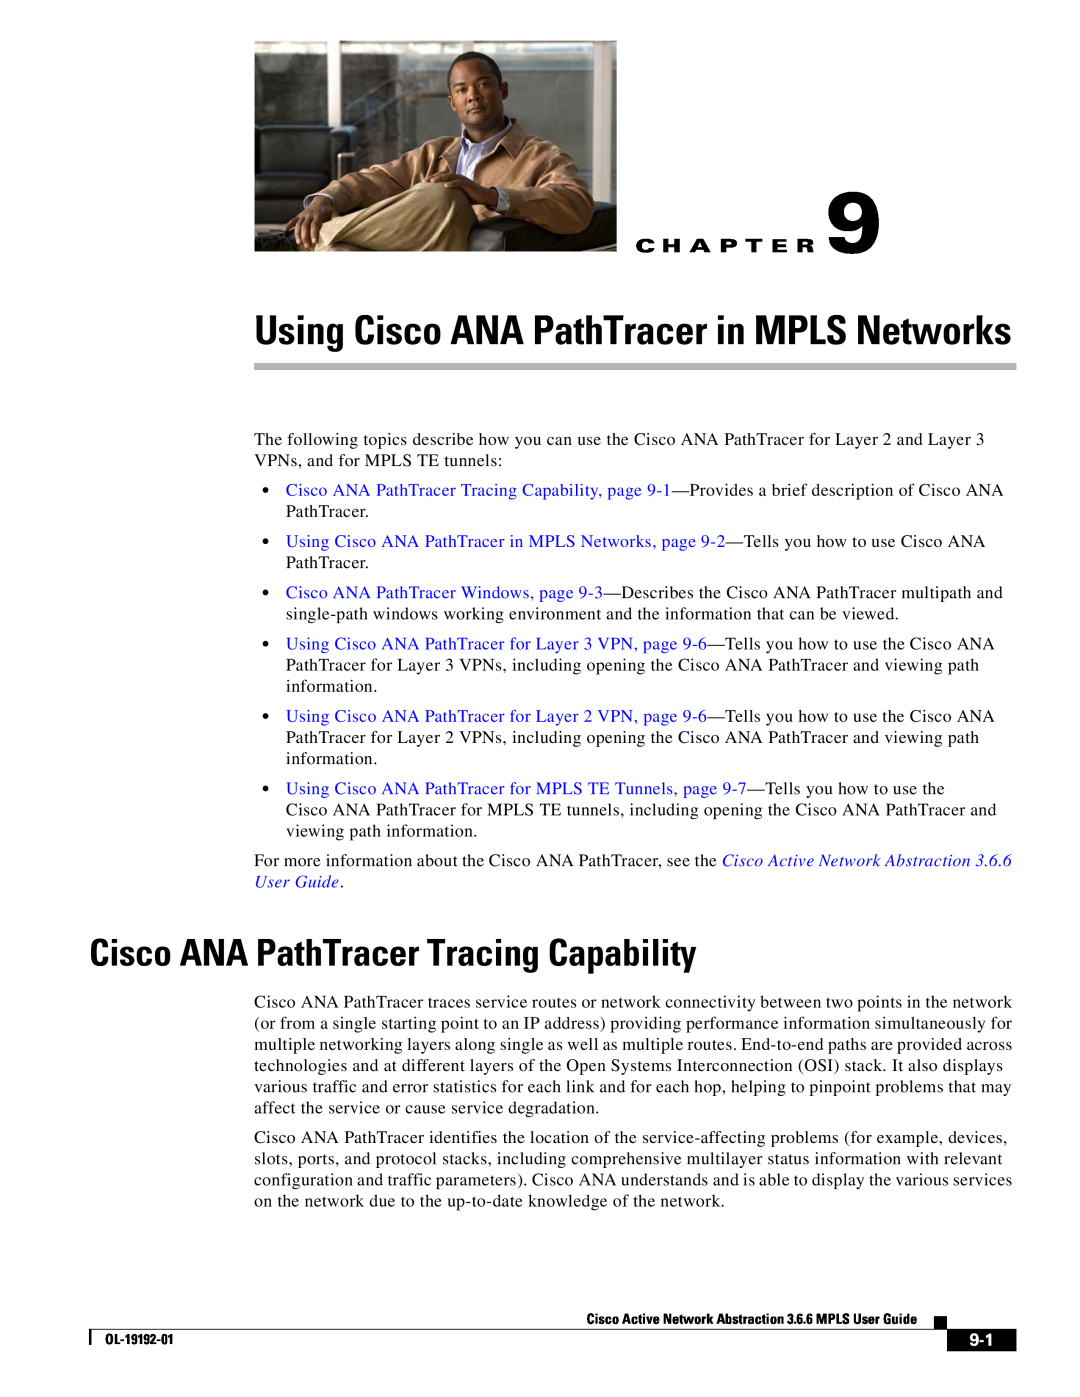 Cisco Systems 3.6.6 Cisco ANA PathTracer Tracing Capability, Using Cisco ANA PathTracer in MPLS Networks, C H A P T E R 